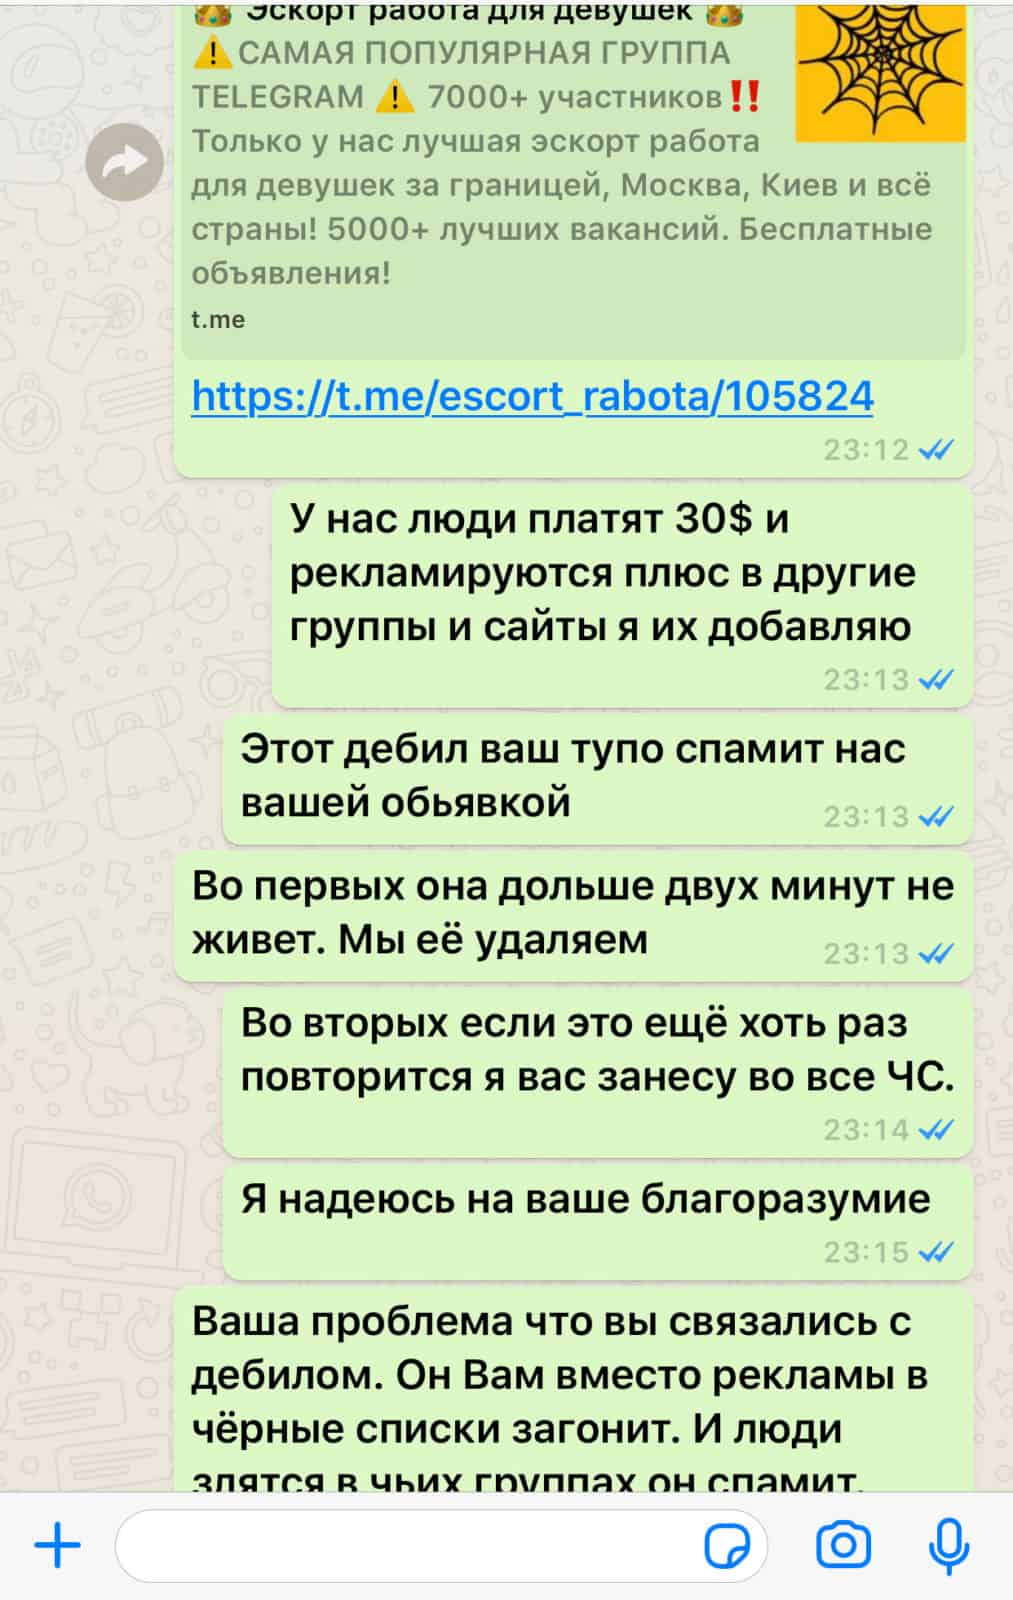 escort-marketing.ru